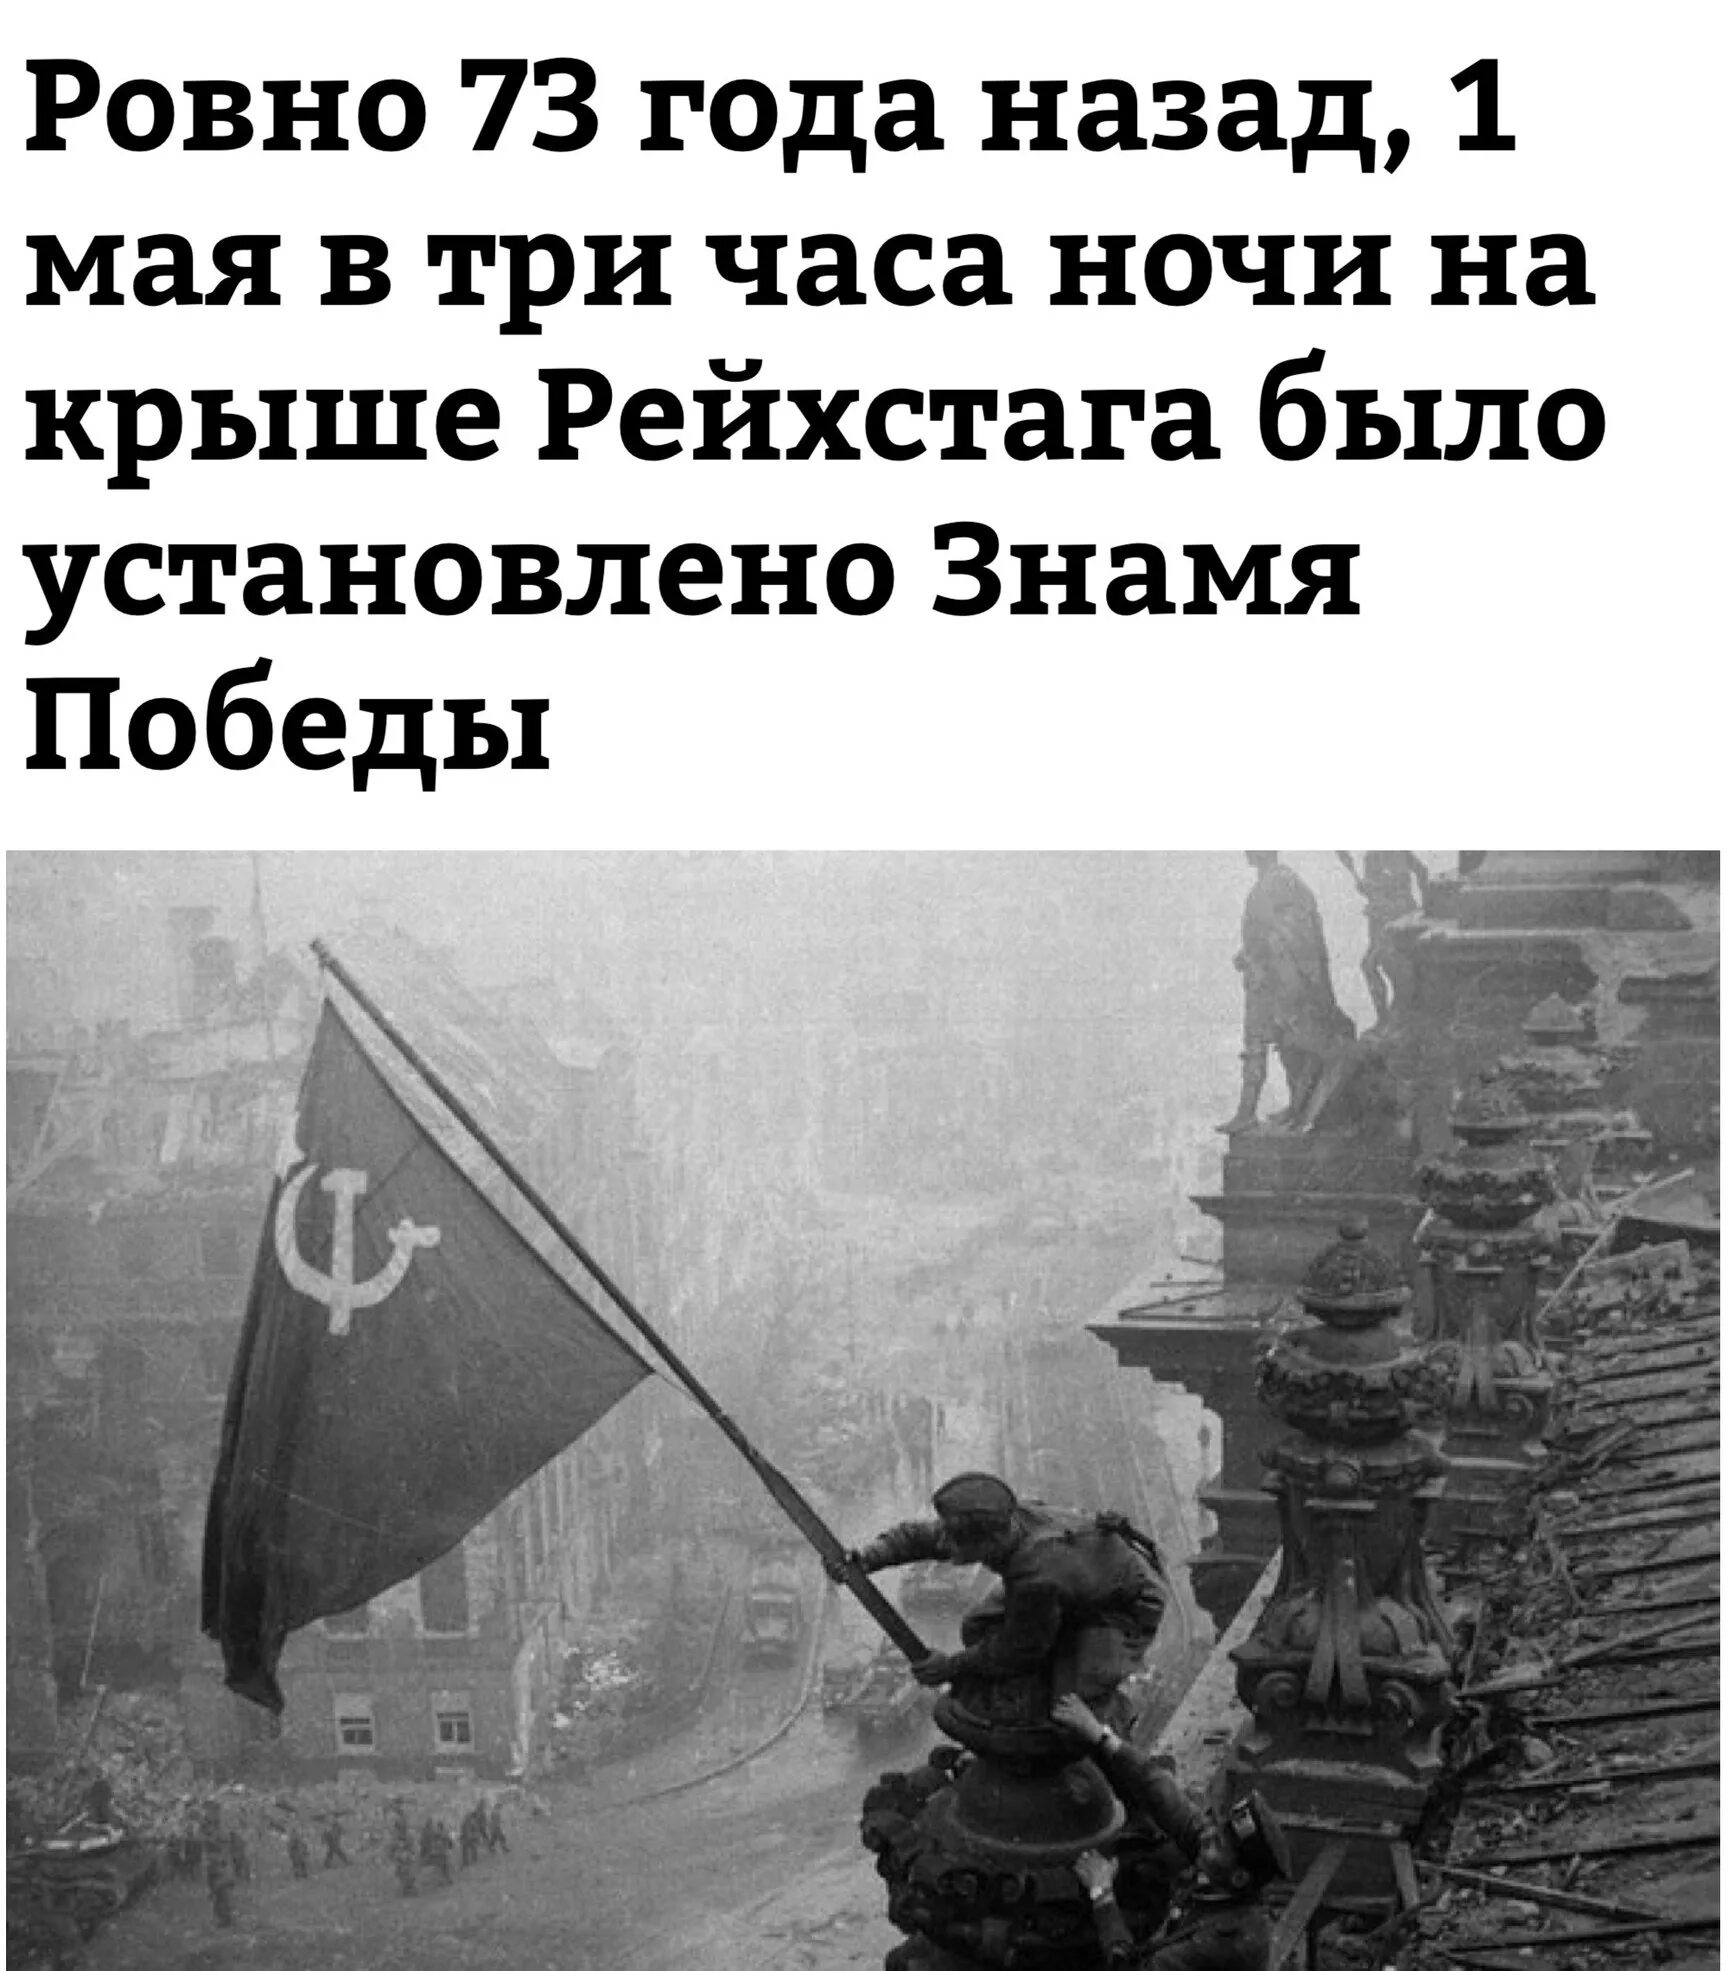 Знамя СССР над Рейхстагом 1945. Победа 1945 флаг над Рейхстагом. Флаг который водрузили над Рейхстагом в 1945. Знамя Победы в Берлине 1945.